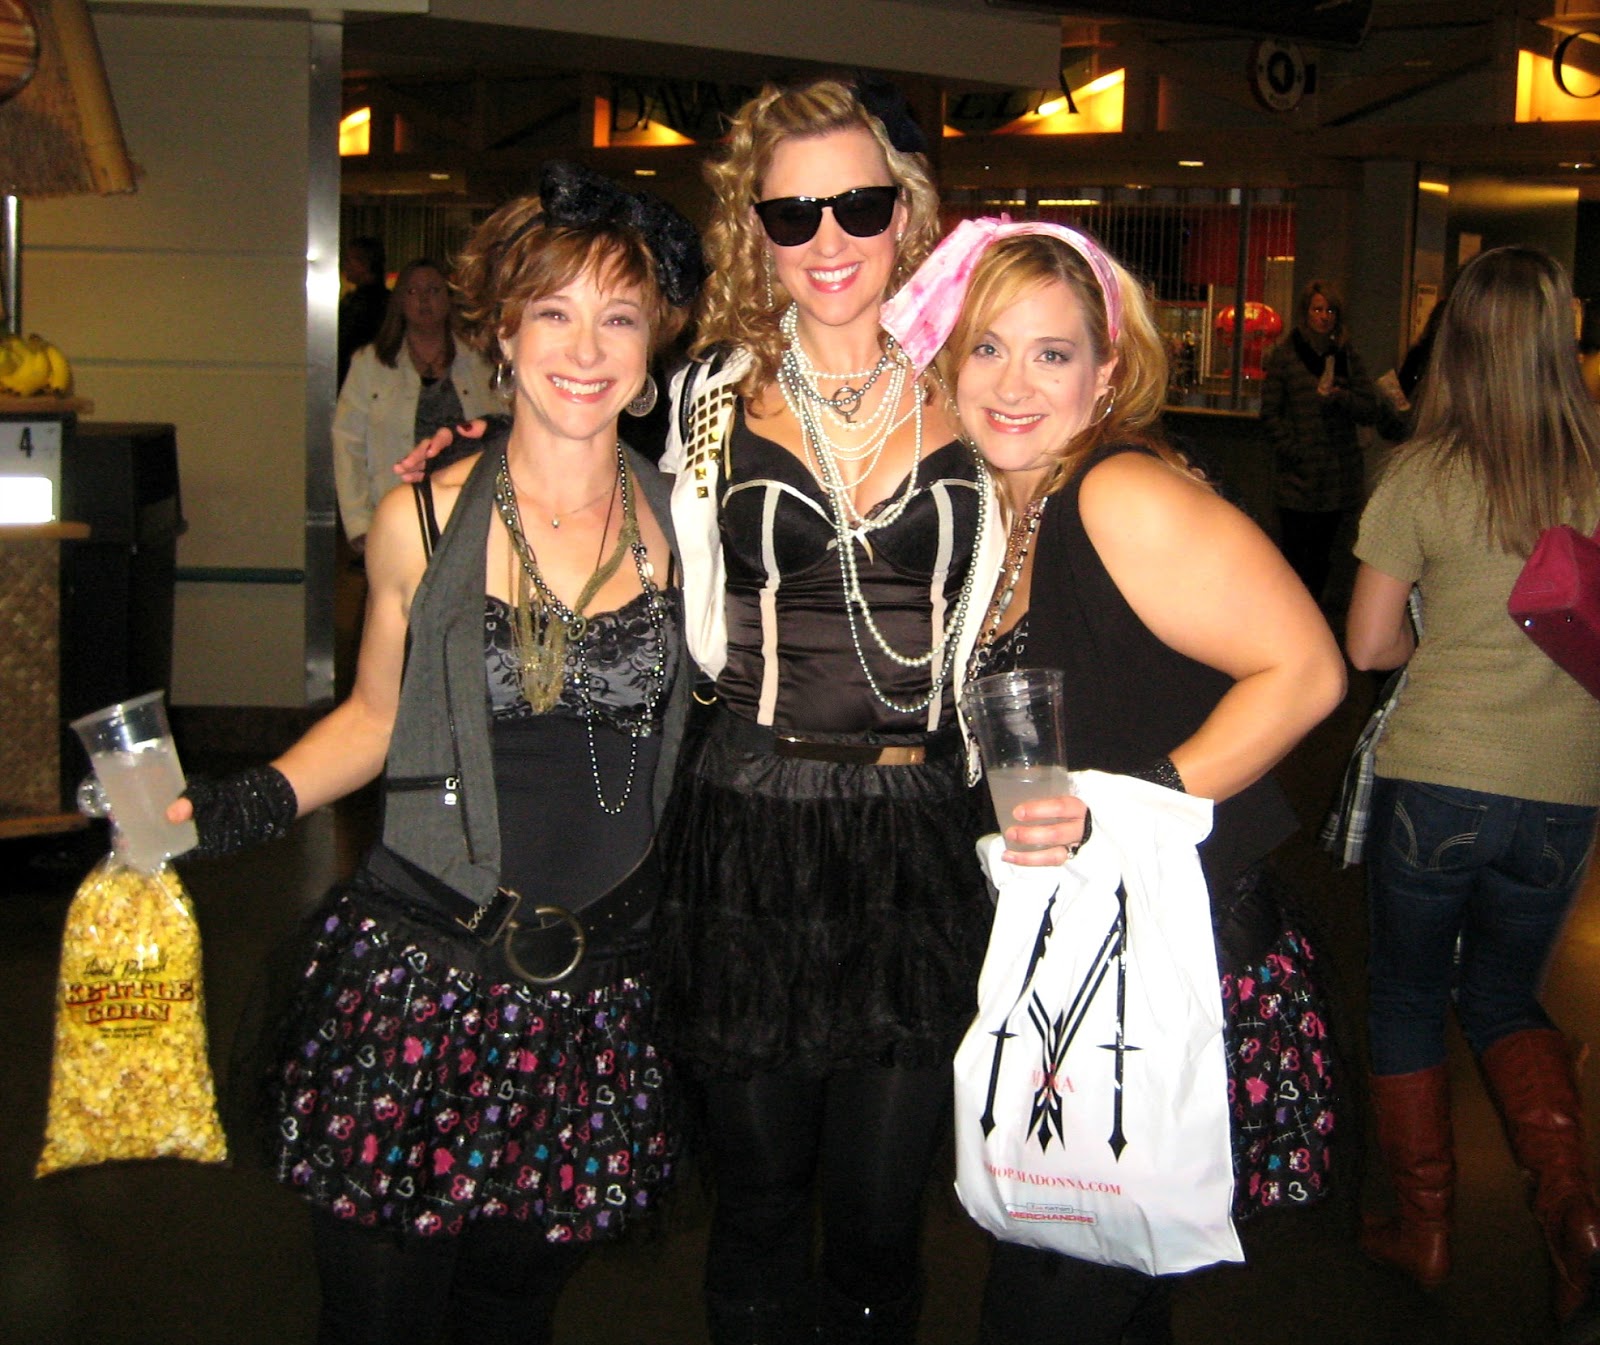 http://4.bp.blogspot.com/-g-asg461c4k/ULVUl9gOghI/AAAAAAAAo6M/lLIqX9wPLE8/s1600/Madonna+Concert+minneapolis+80s+style+outfit+costume+picture.jpg